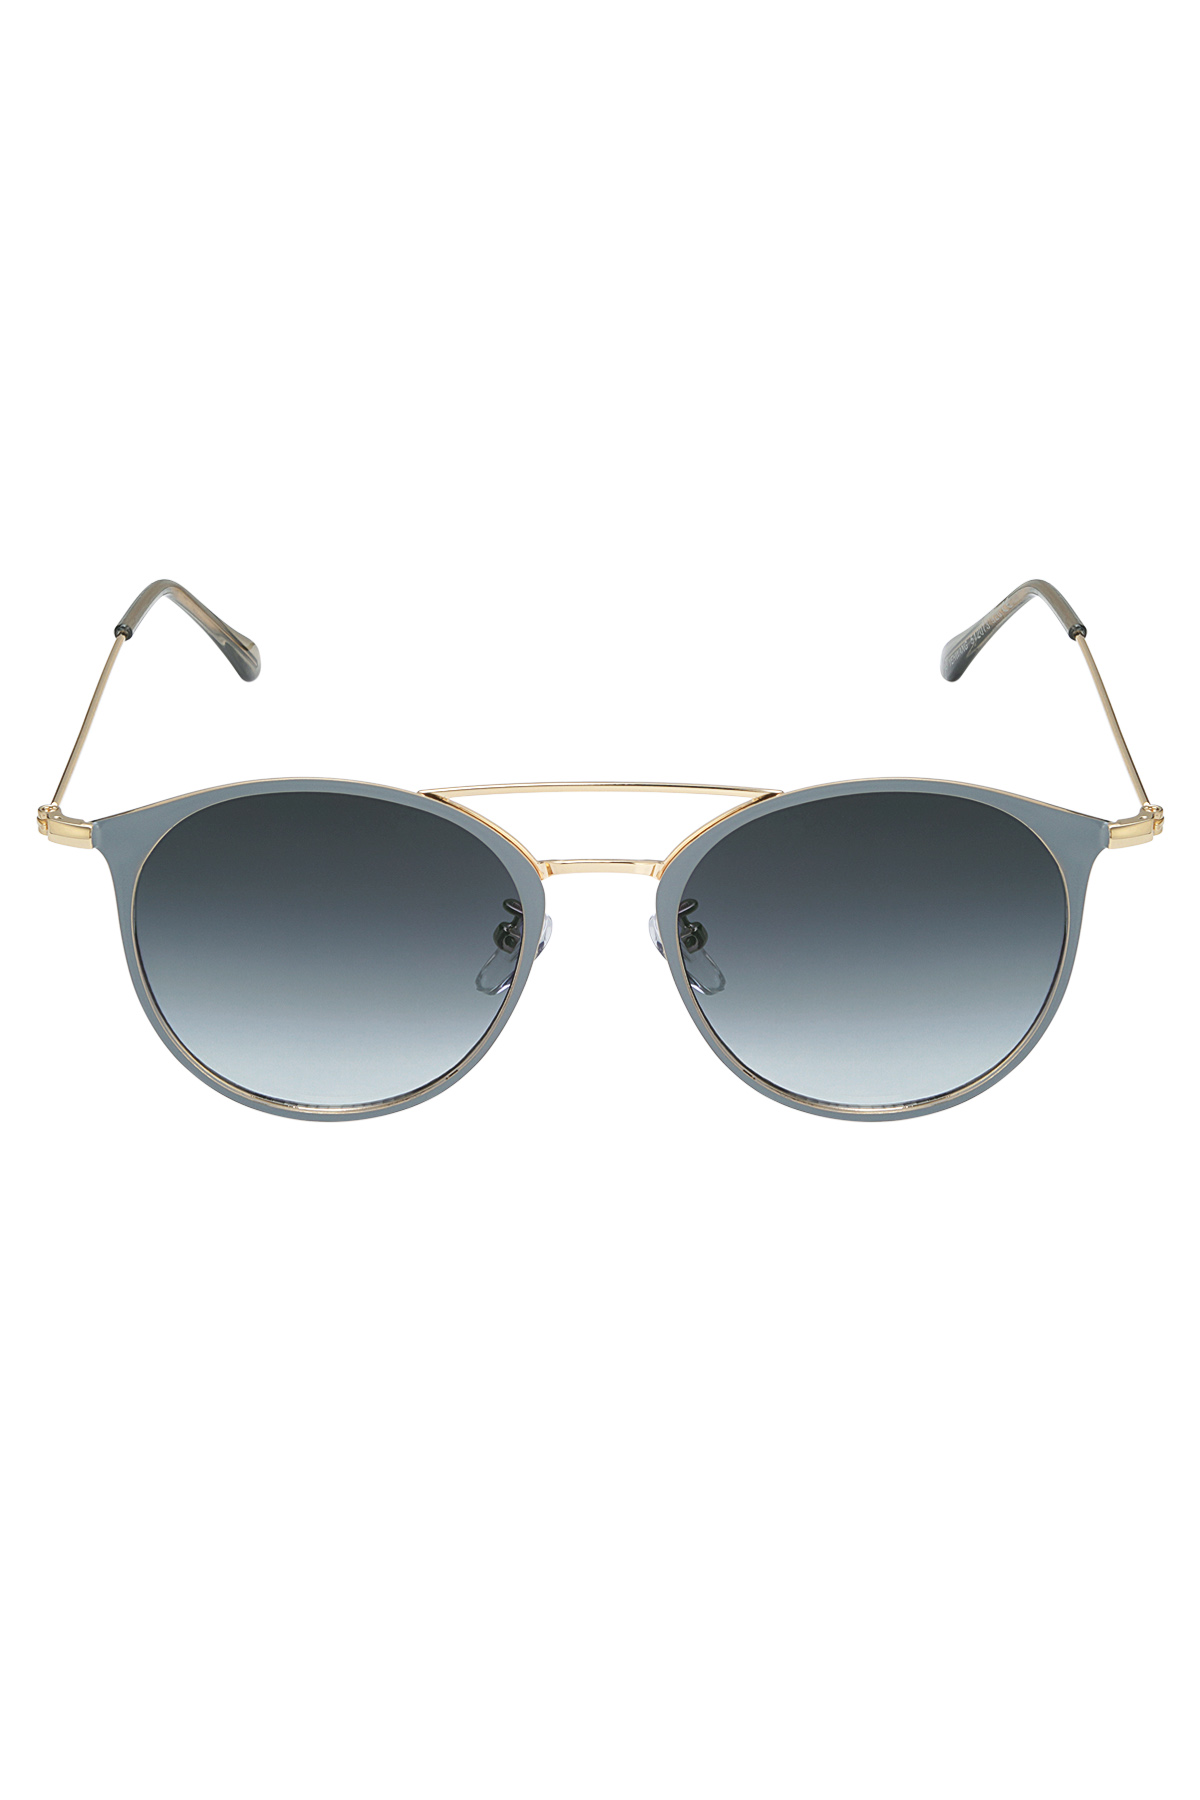 Sunglasses summer vibe - gray  Picture5